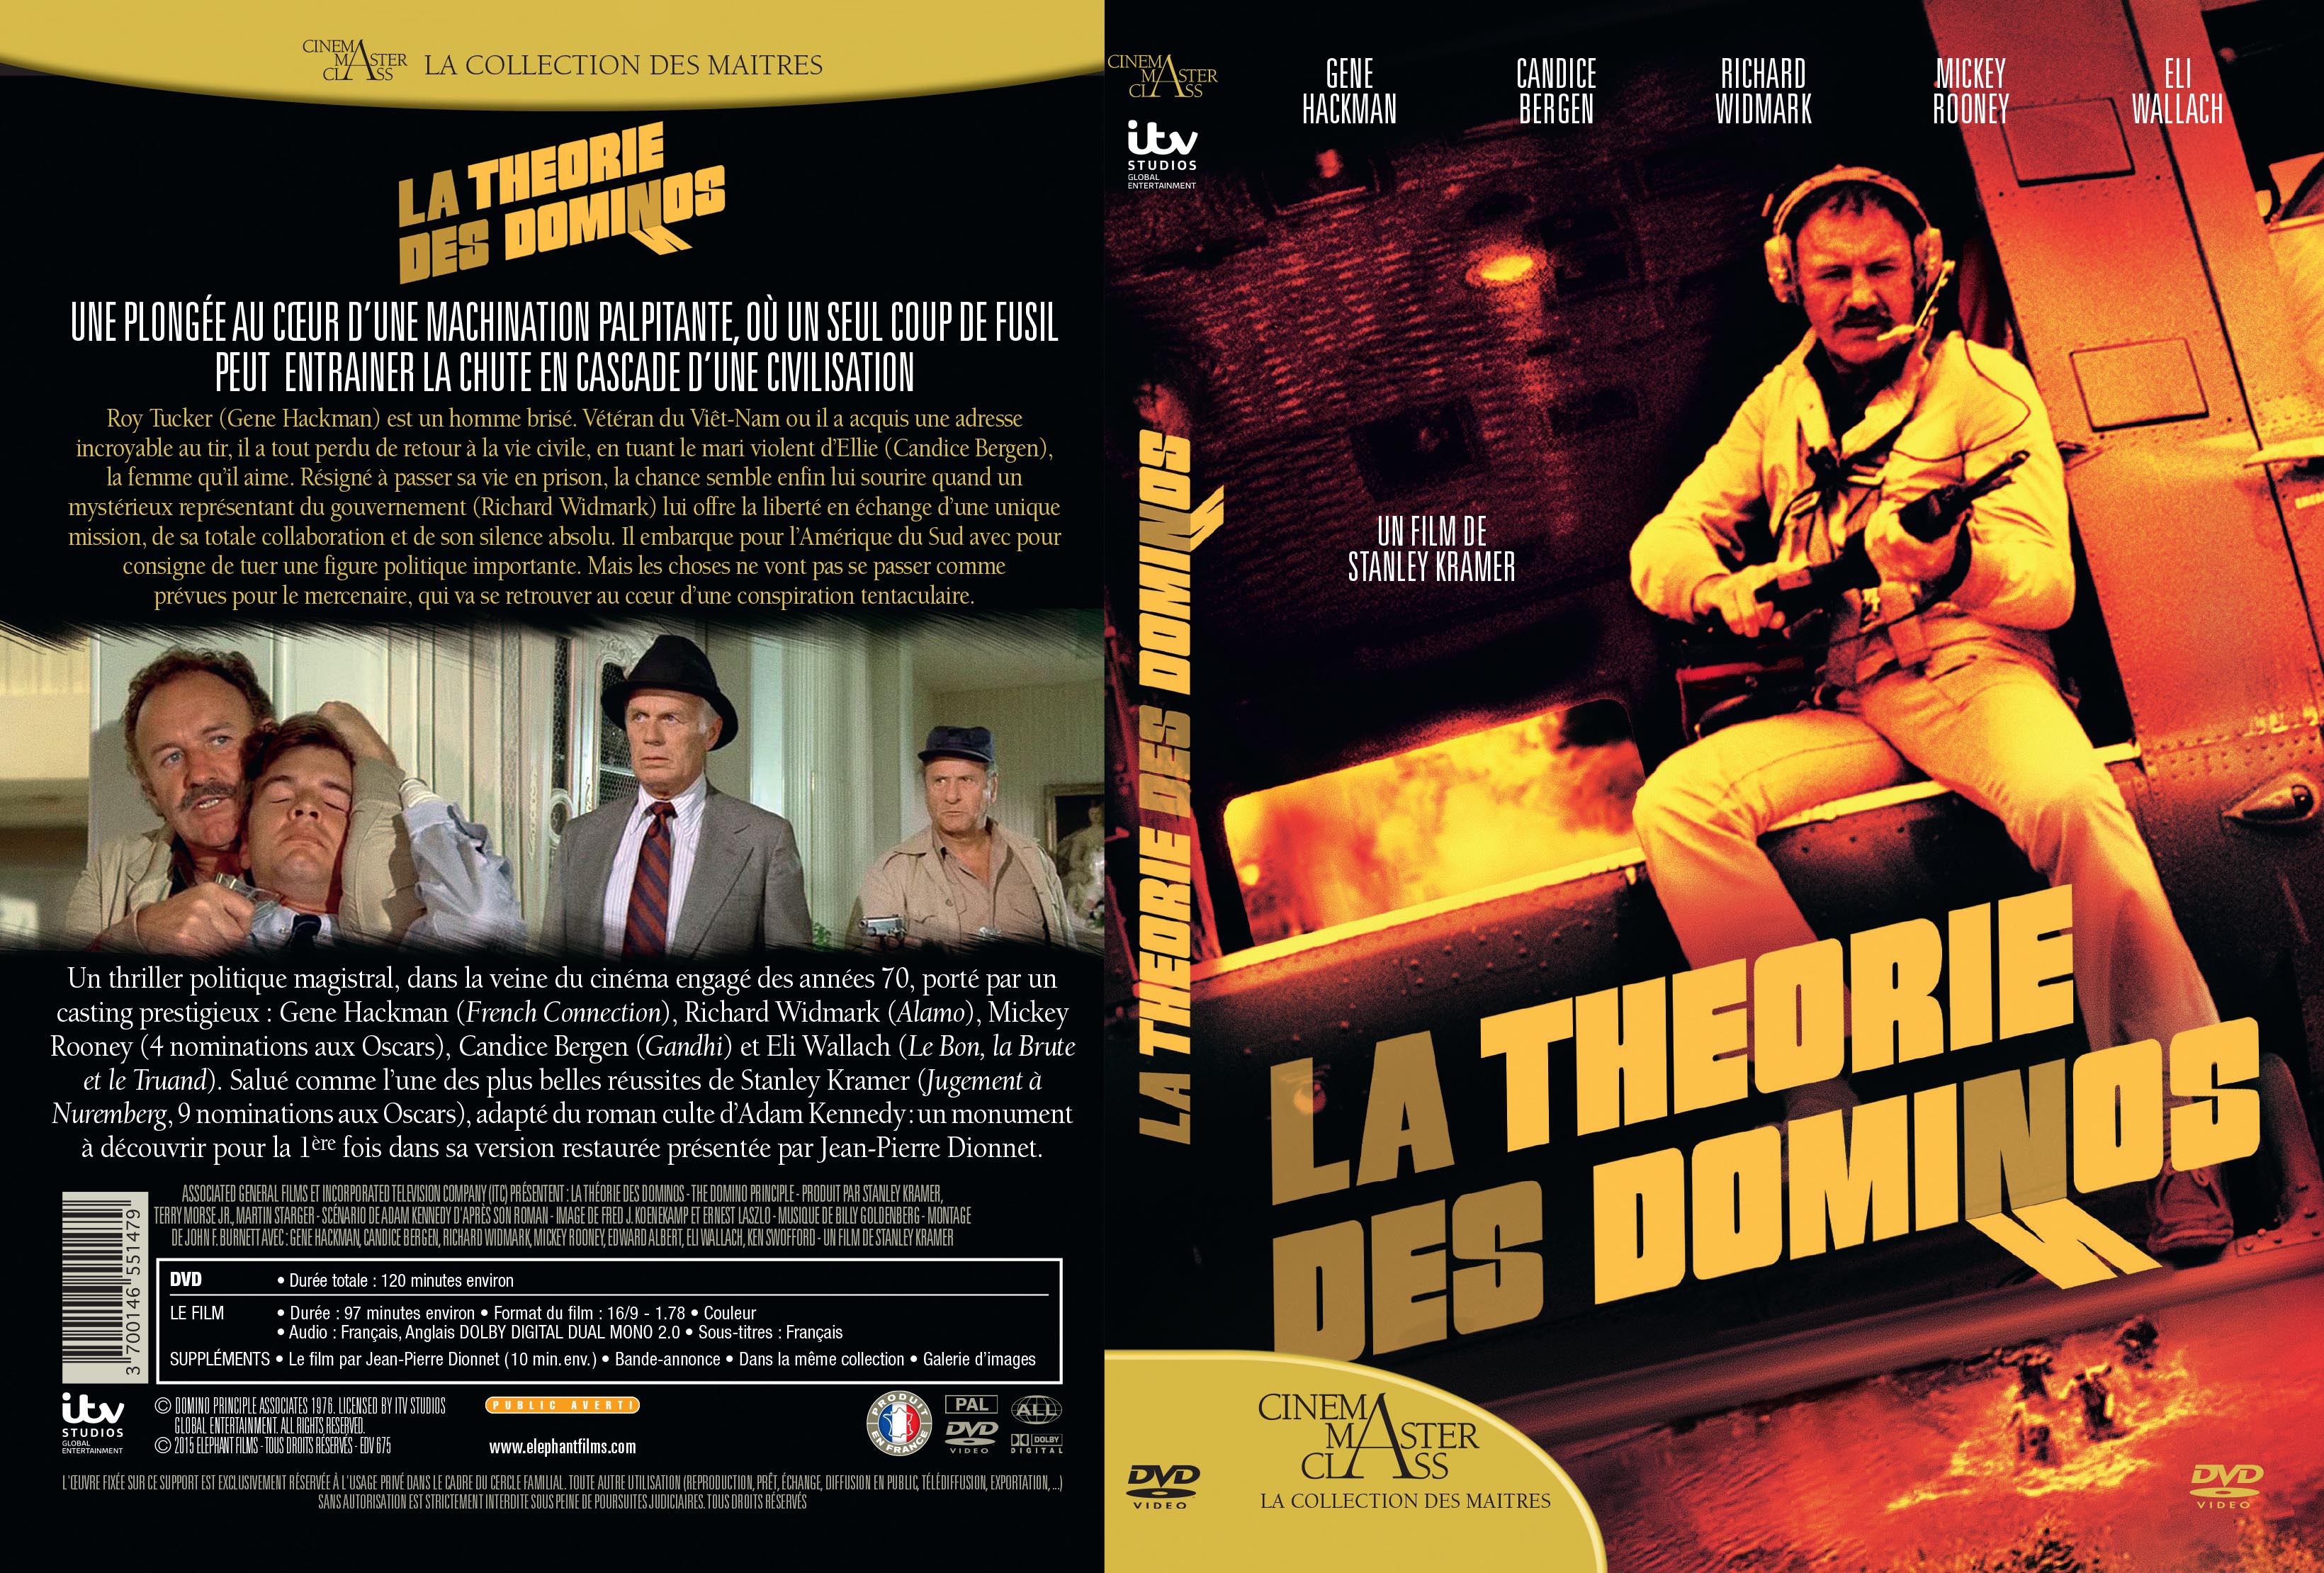 Jaquette DVD La thorie des dominos v3